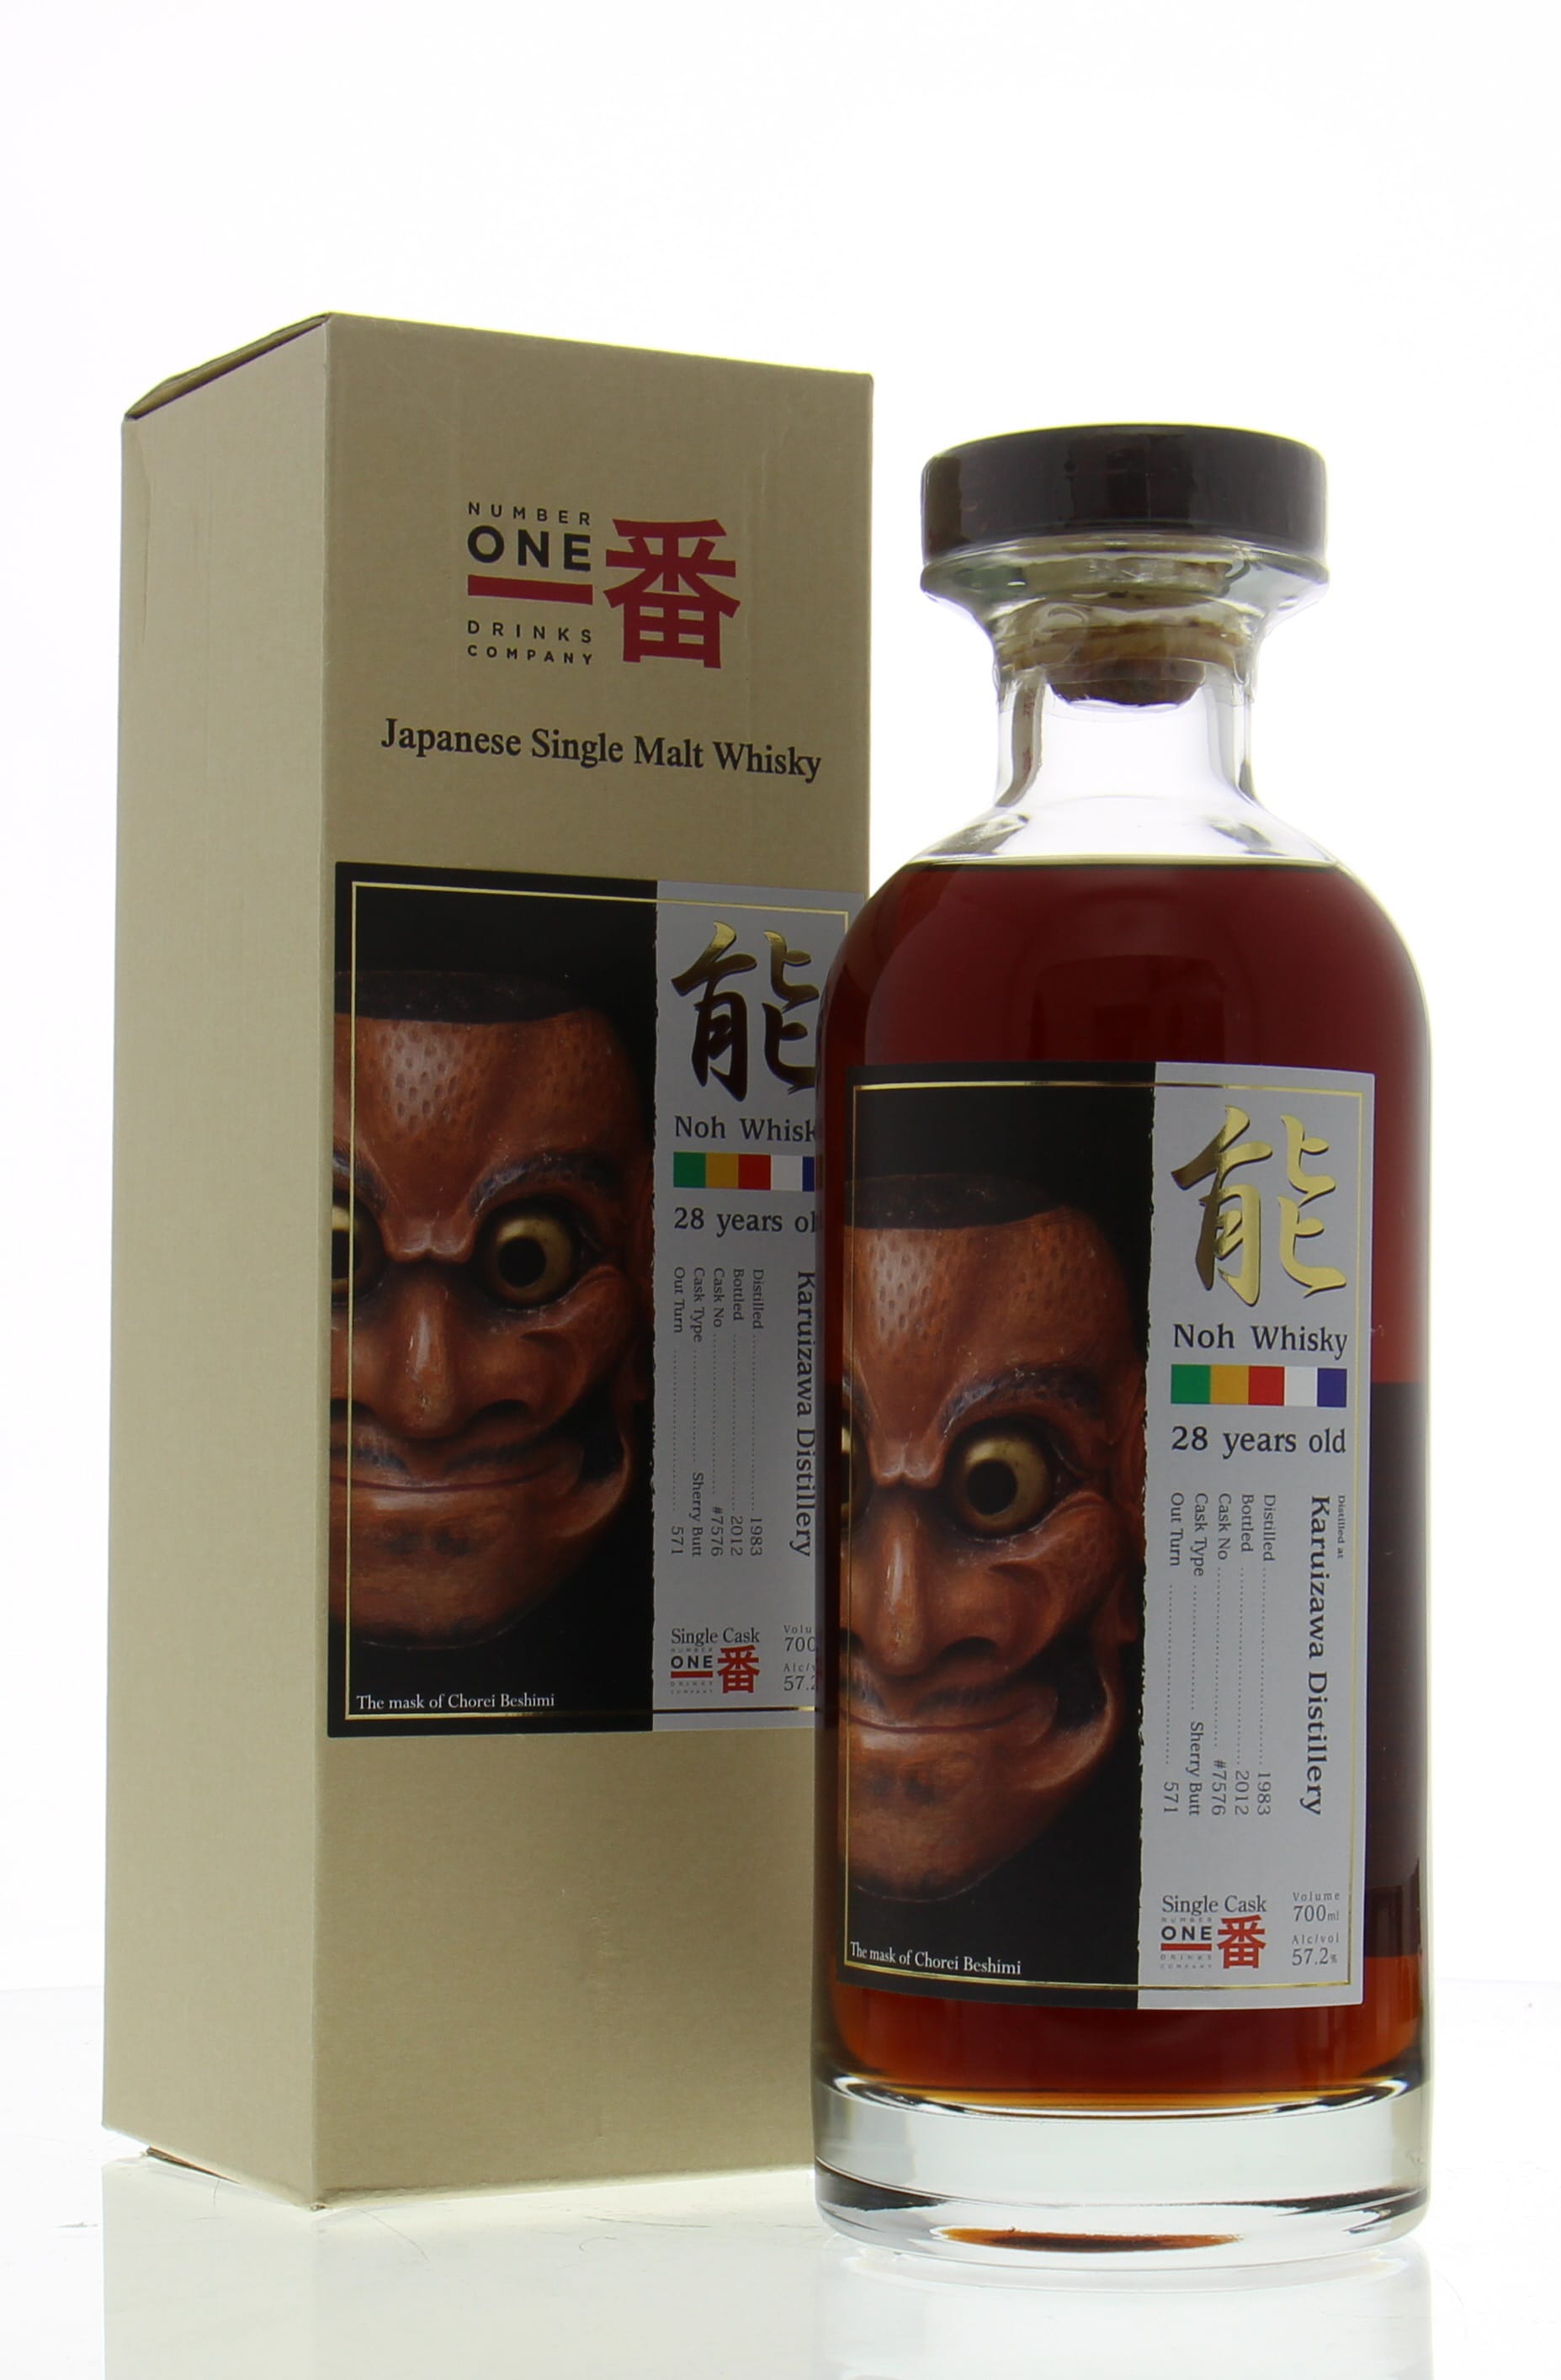 Karuizawa - 28 Years Old Noh Whisky Chorei Beshimi Cask 7576 57.2% 1983 Perfect